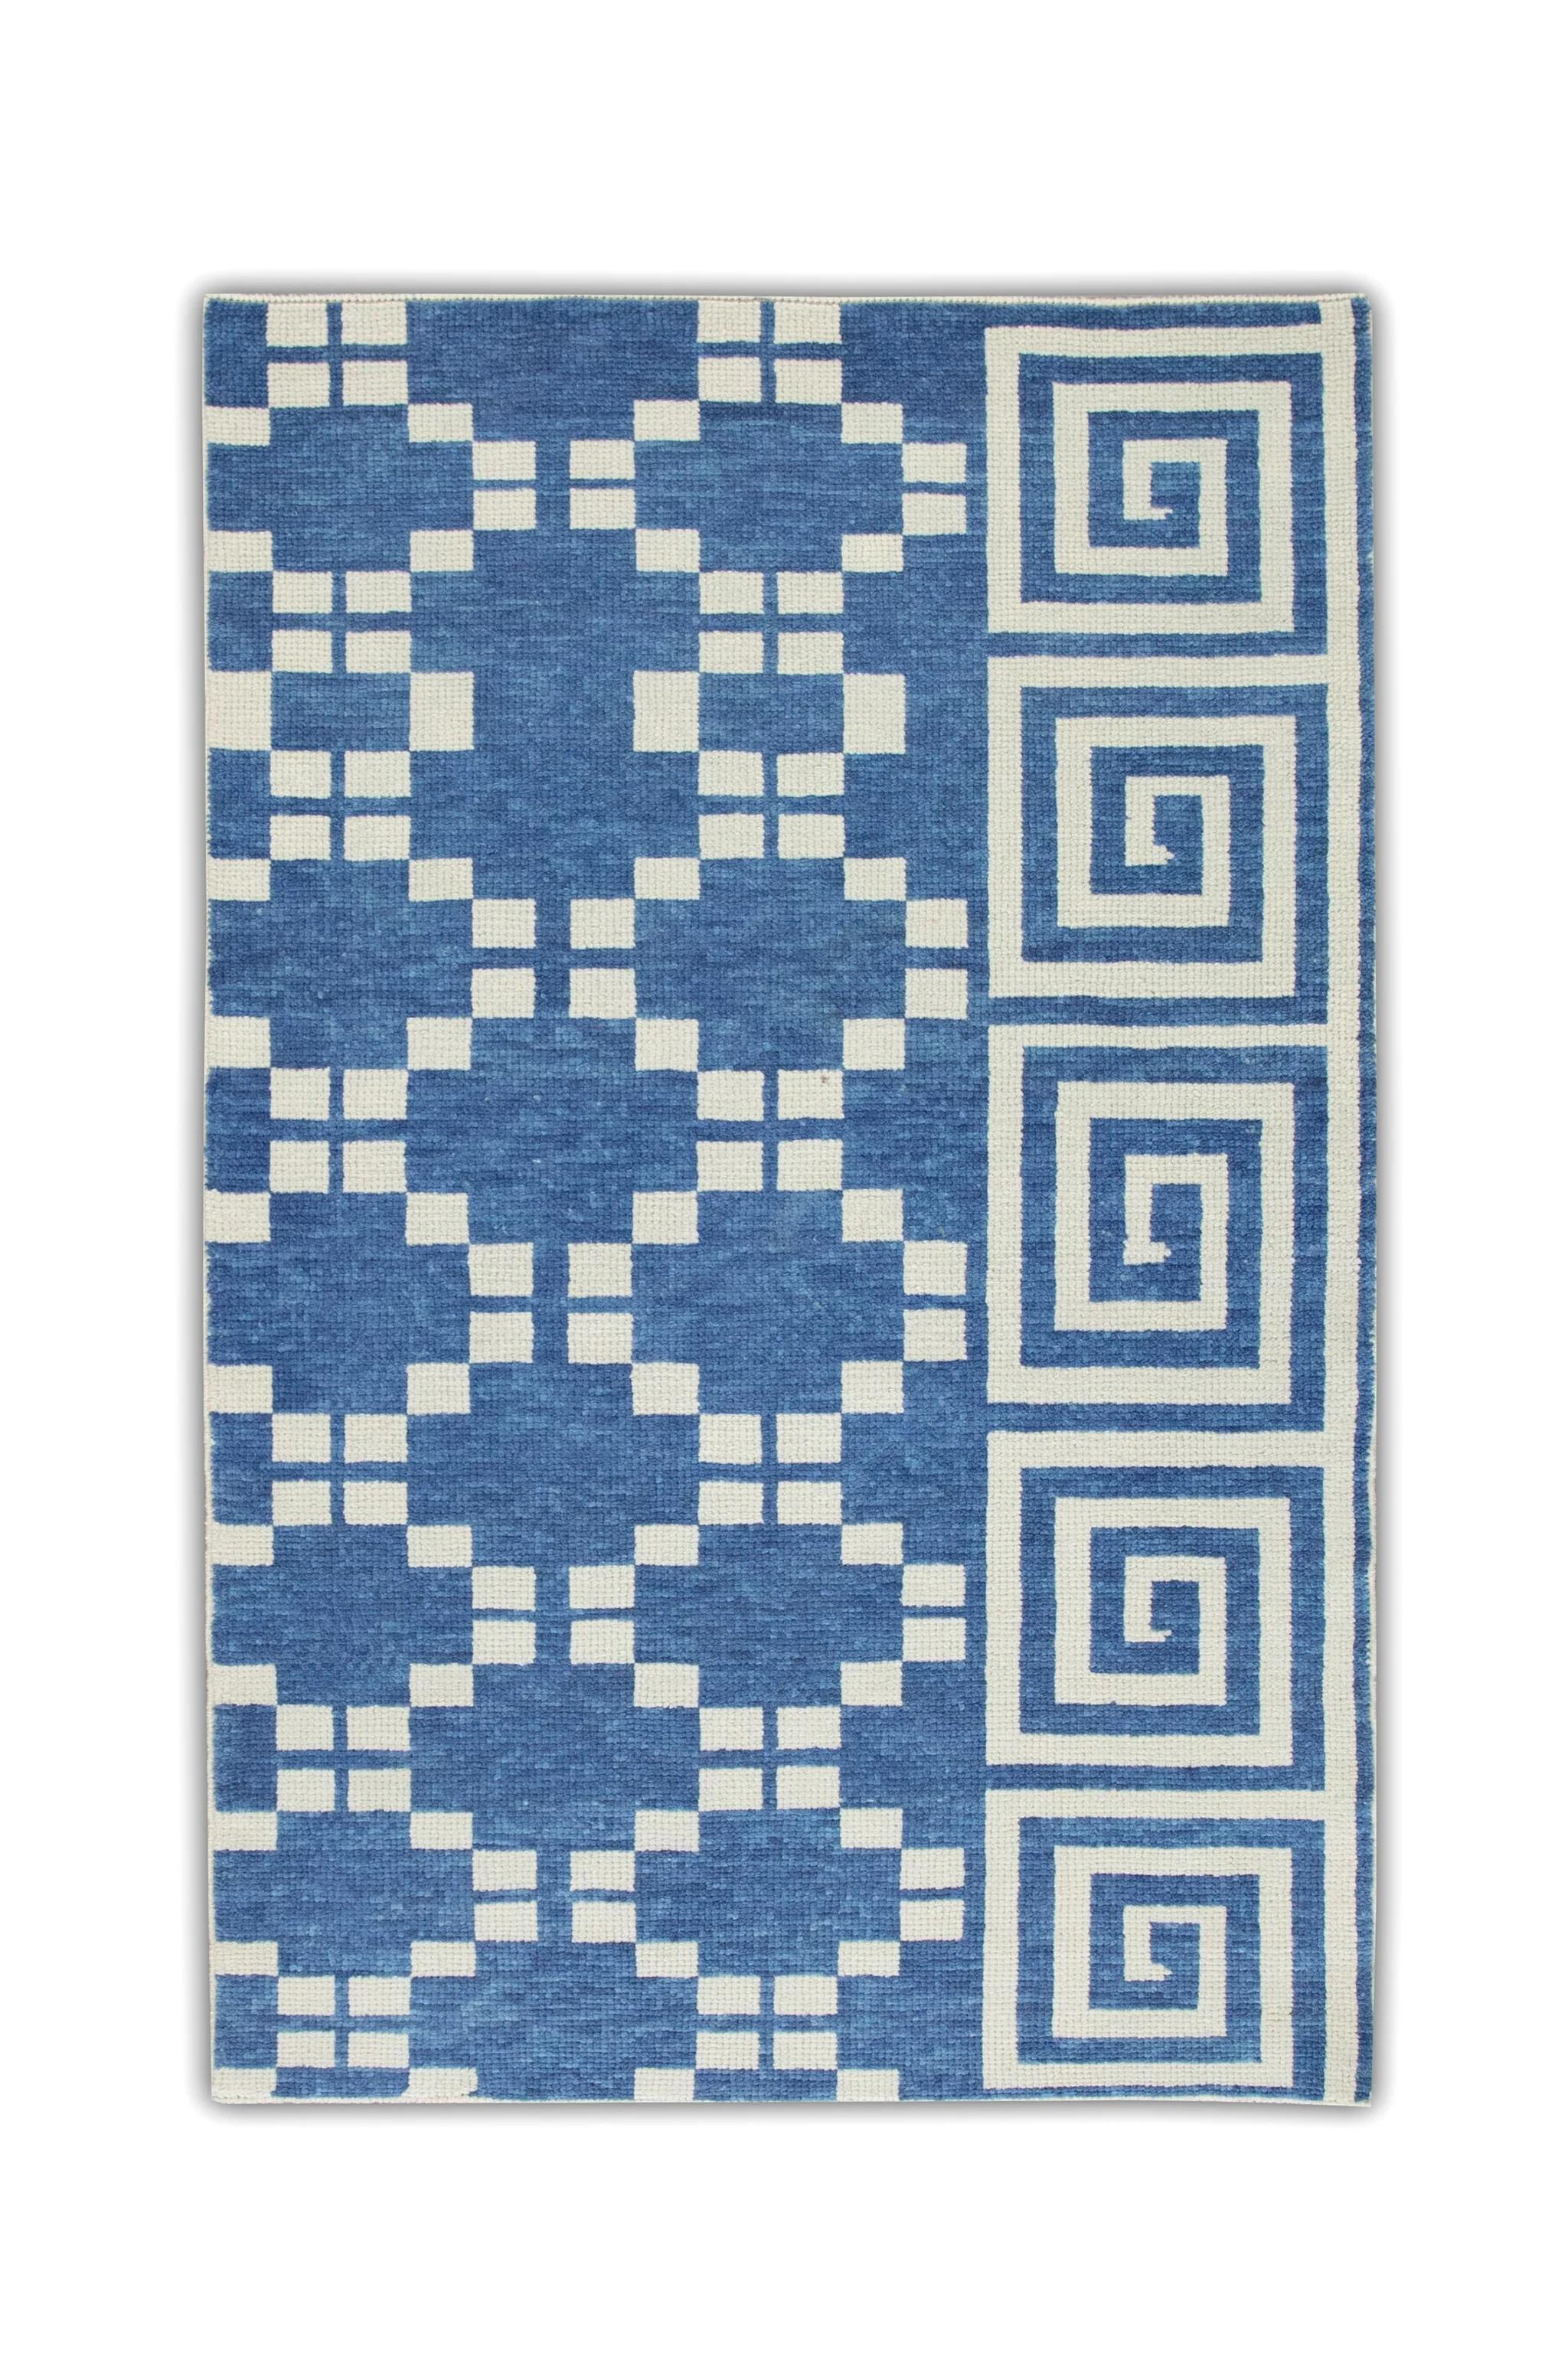 Wool Tribal Geometric Handwoven Turkish Oushak Rug in Blue and Cream 3' x 5'2